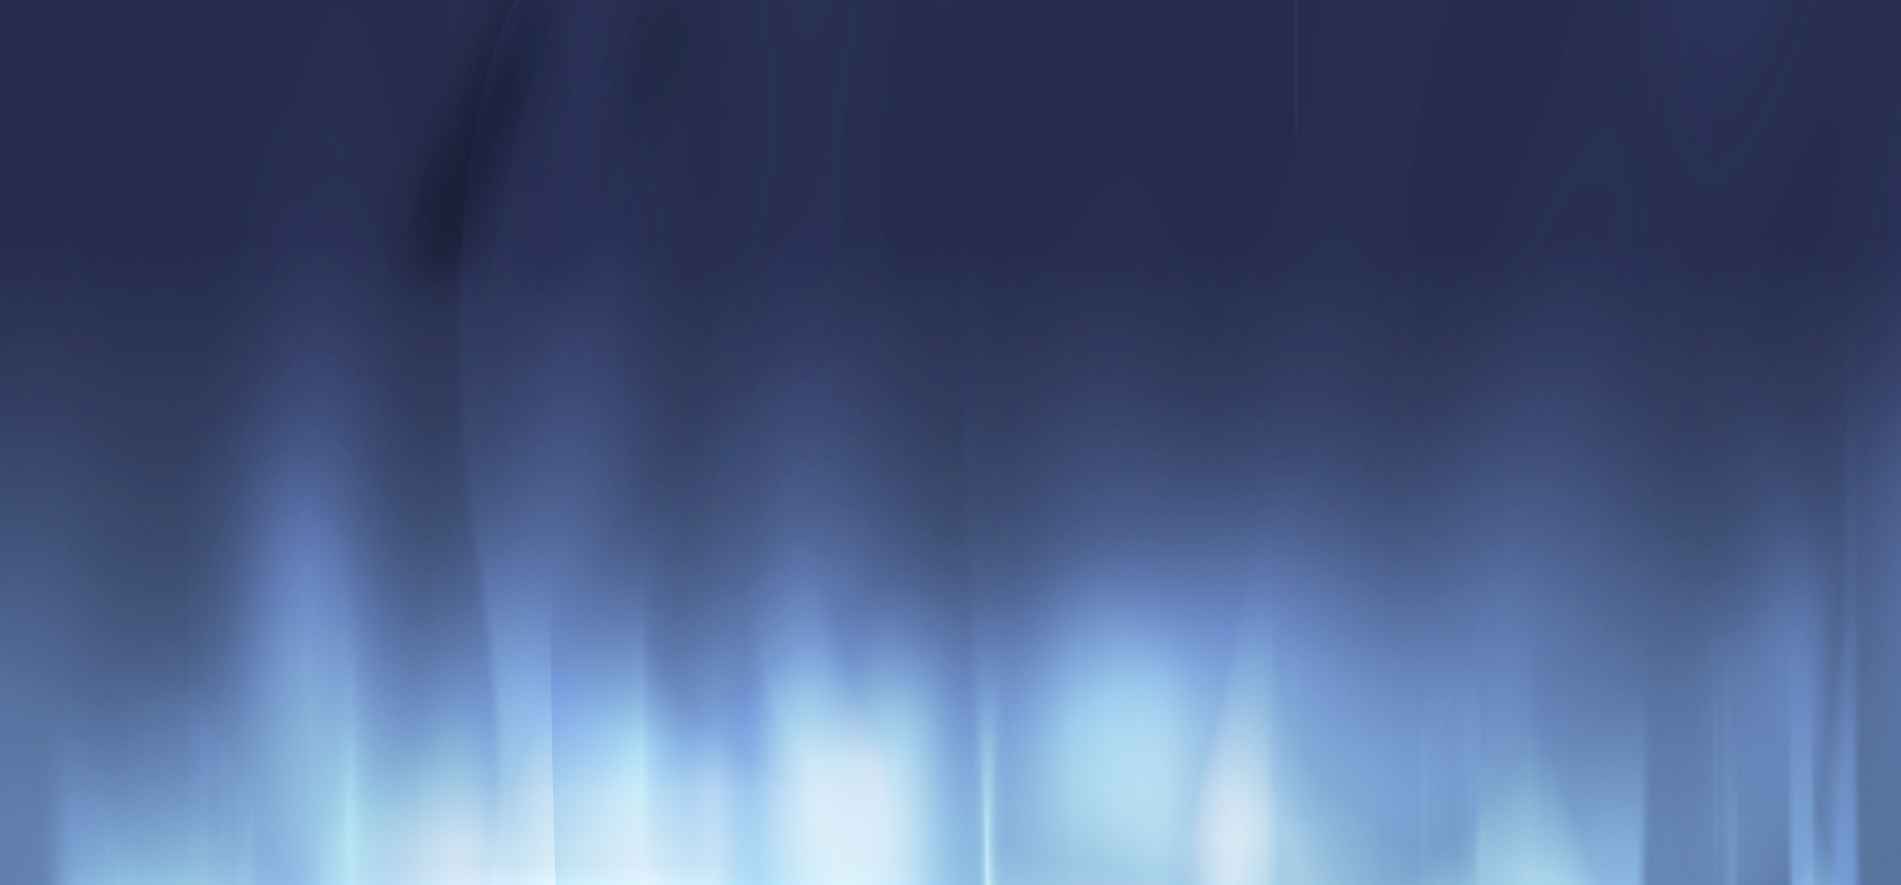  Solid Light Blue Background hd wallpaper background desktop 1901x885